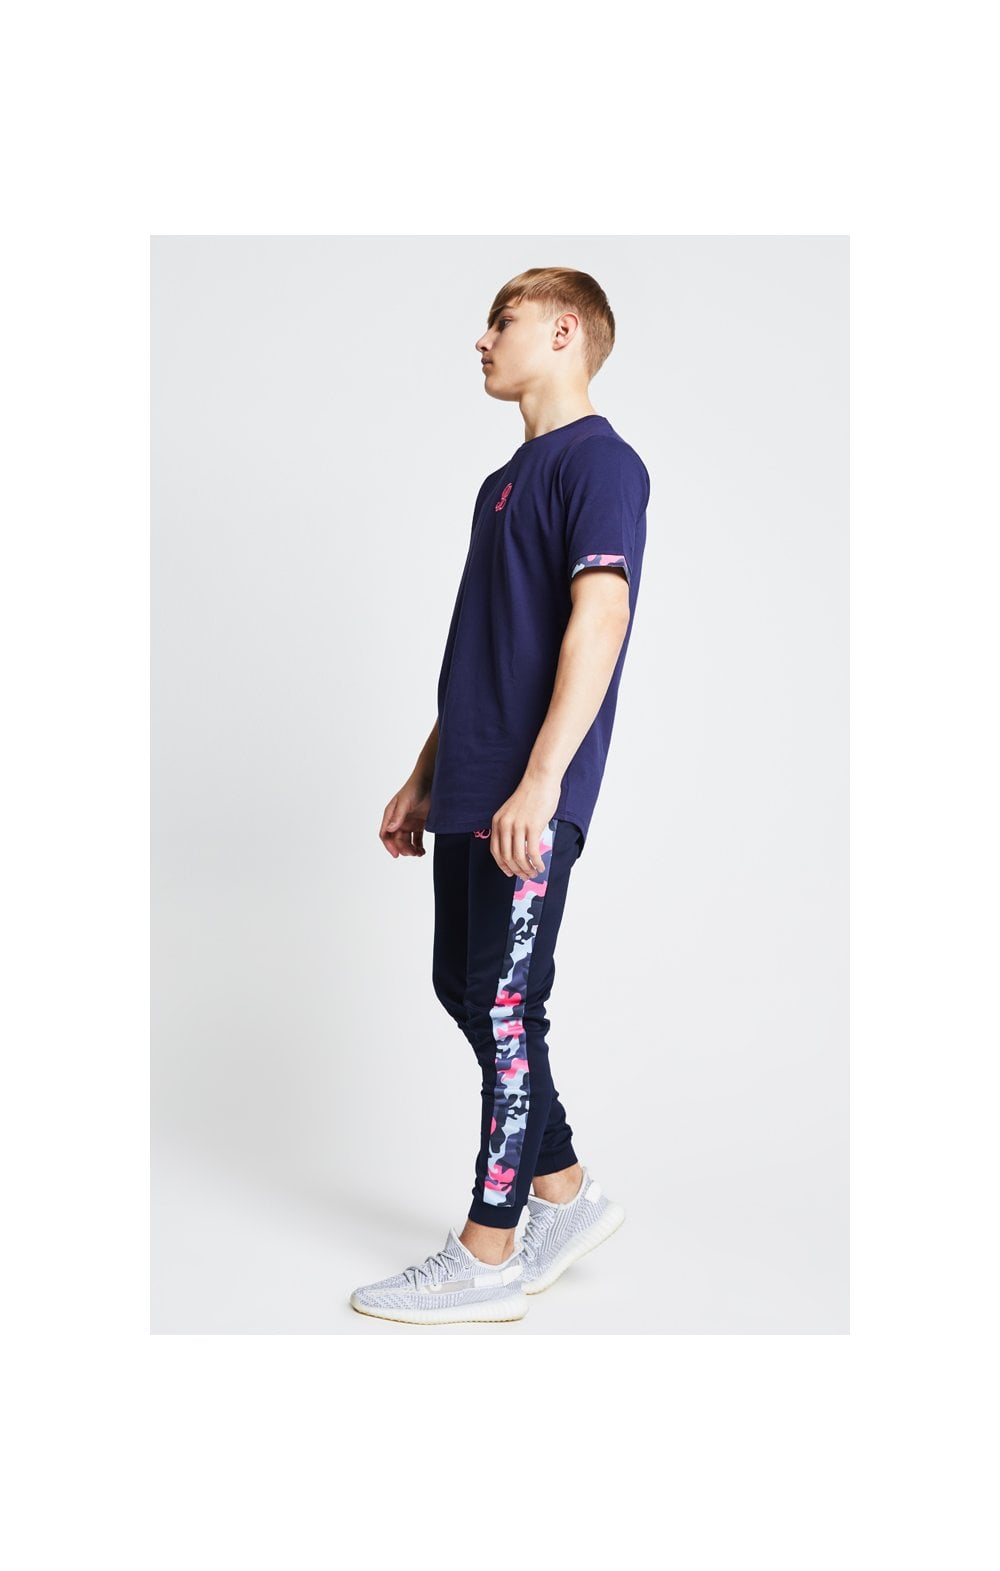 Illusive London T-Shirt Kontrast Saum - Marineblau und Neon Rosa Camouflage (5)